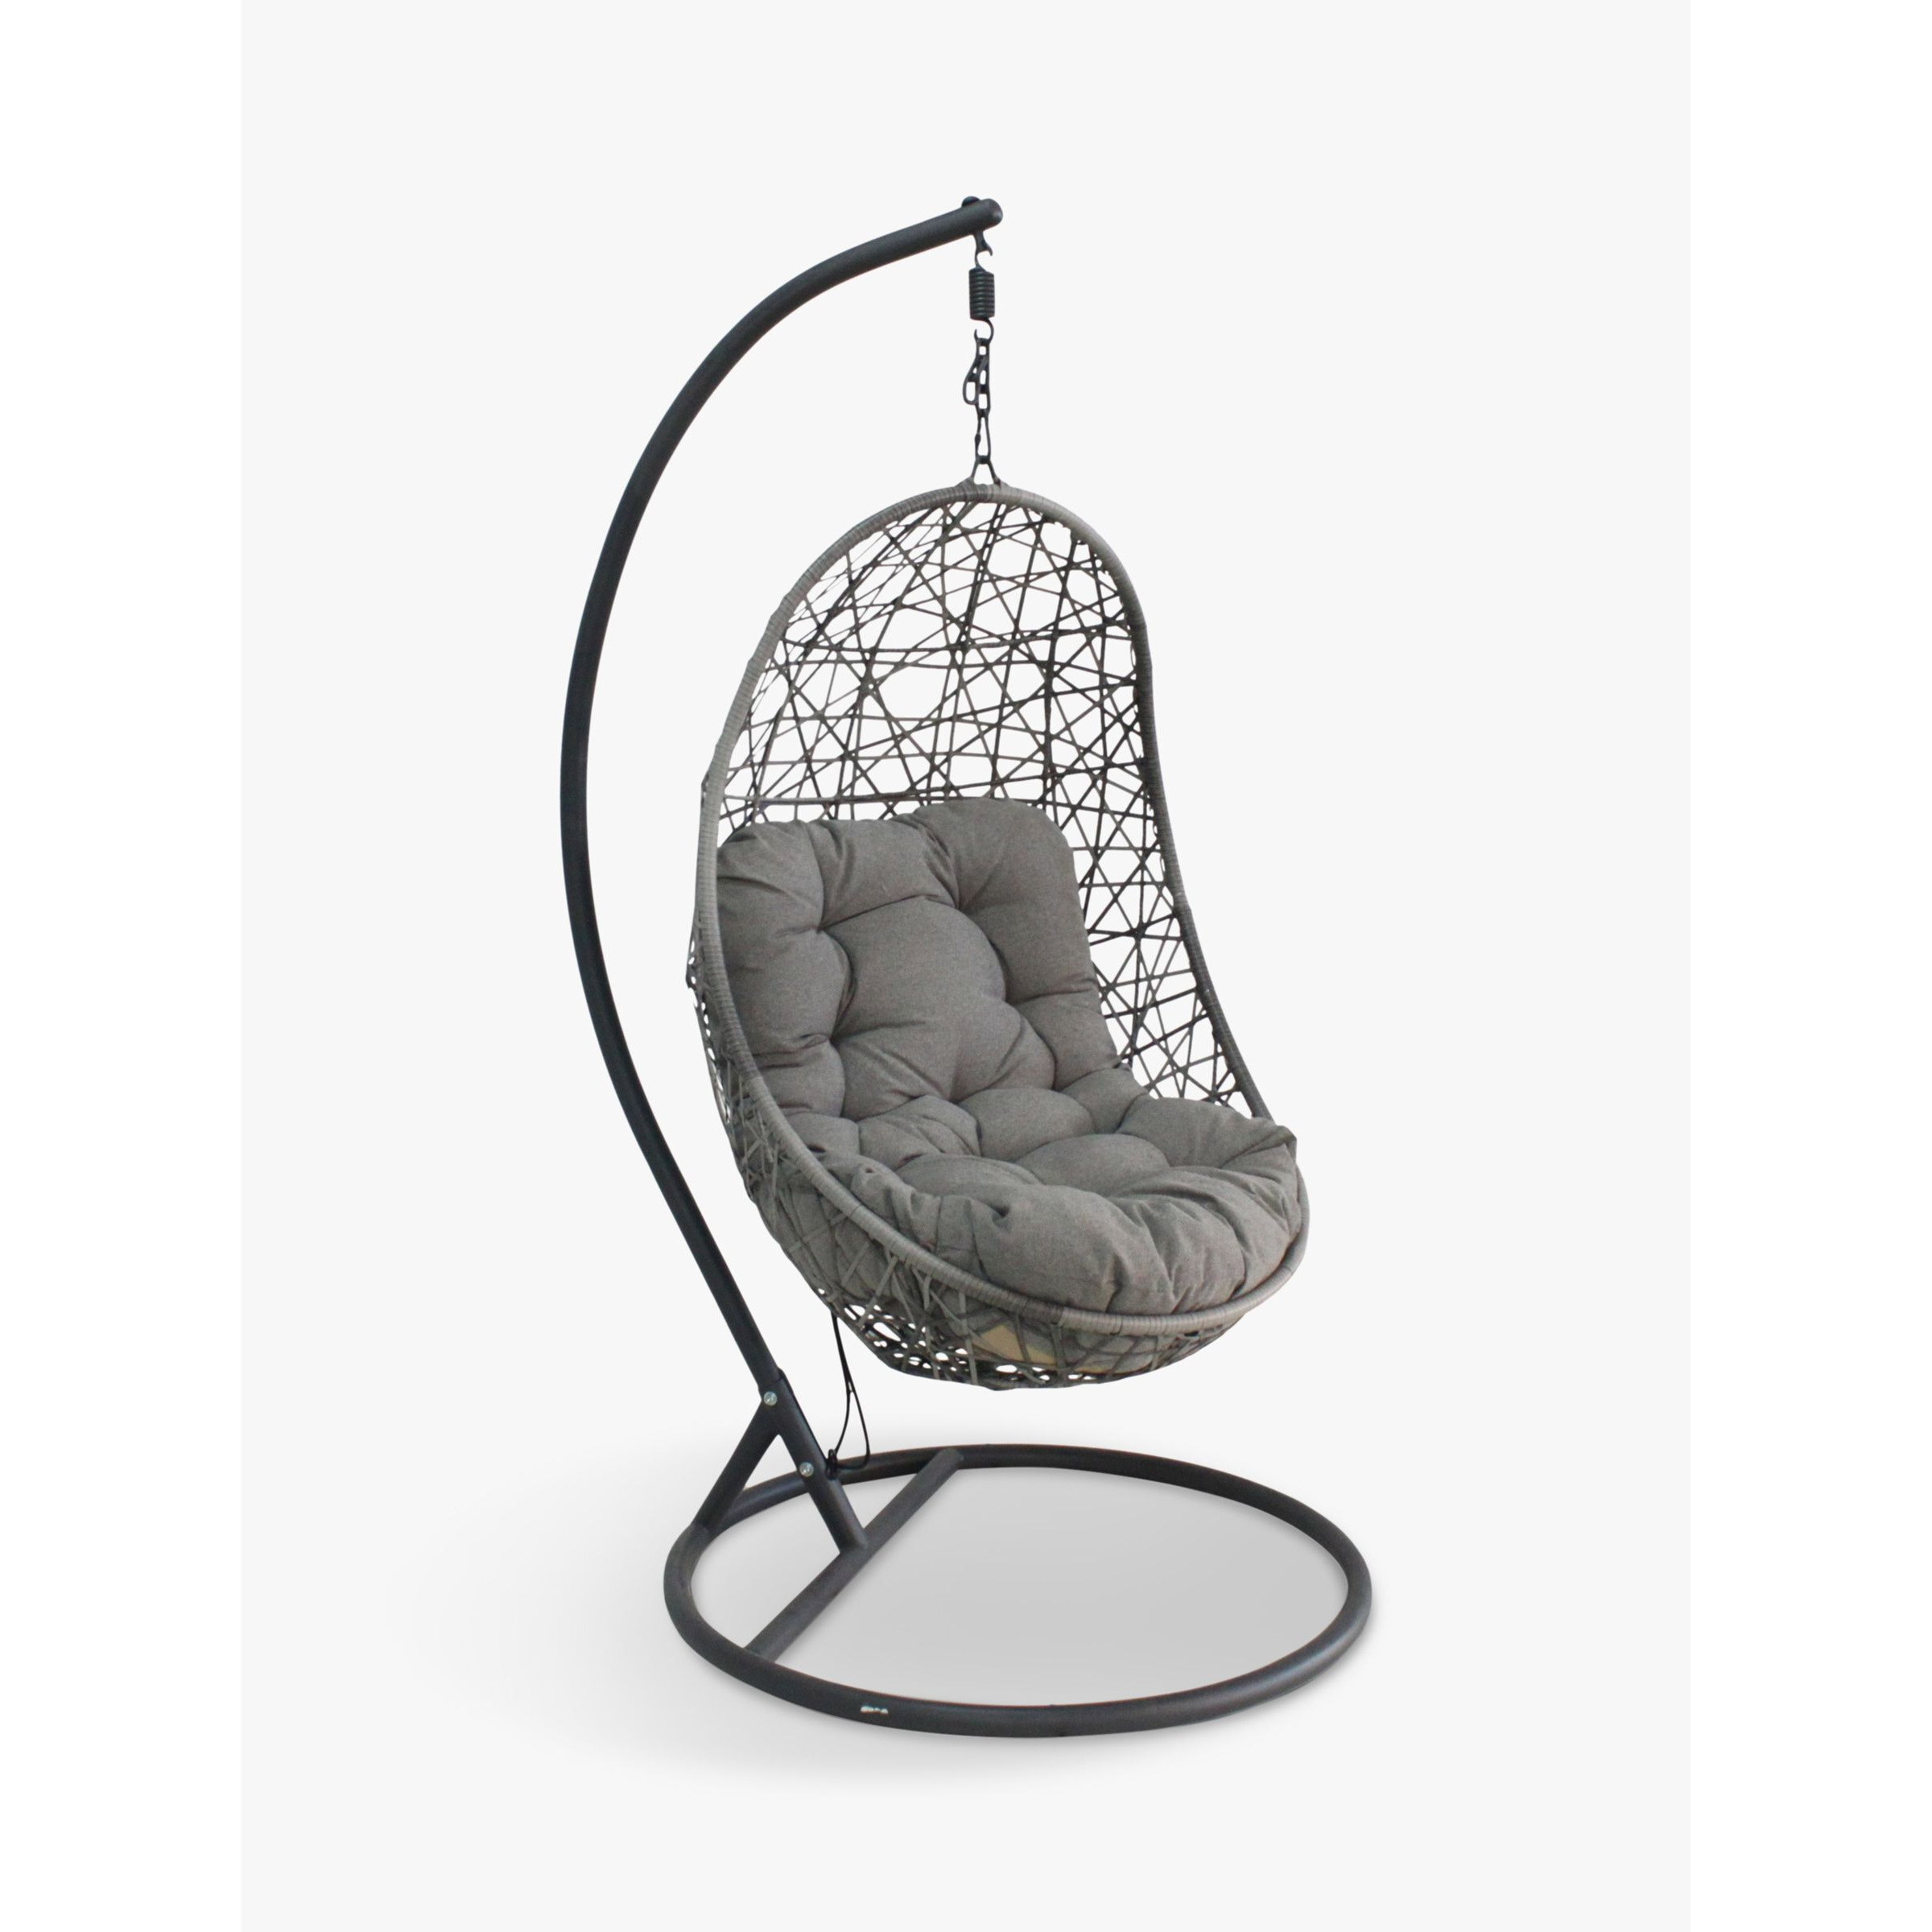 LG Outdoor Monte Carlo Garden Swing Seat Egg Chair - image 1